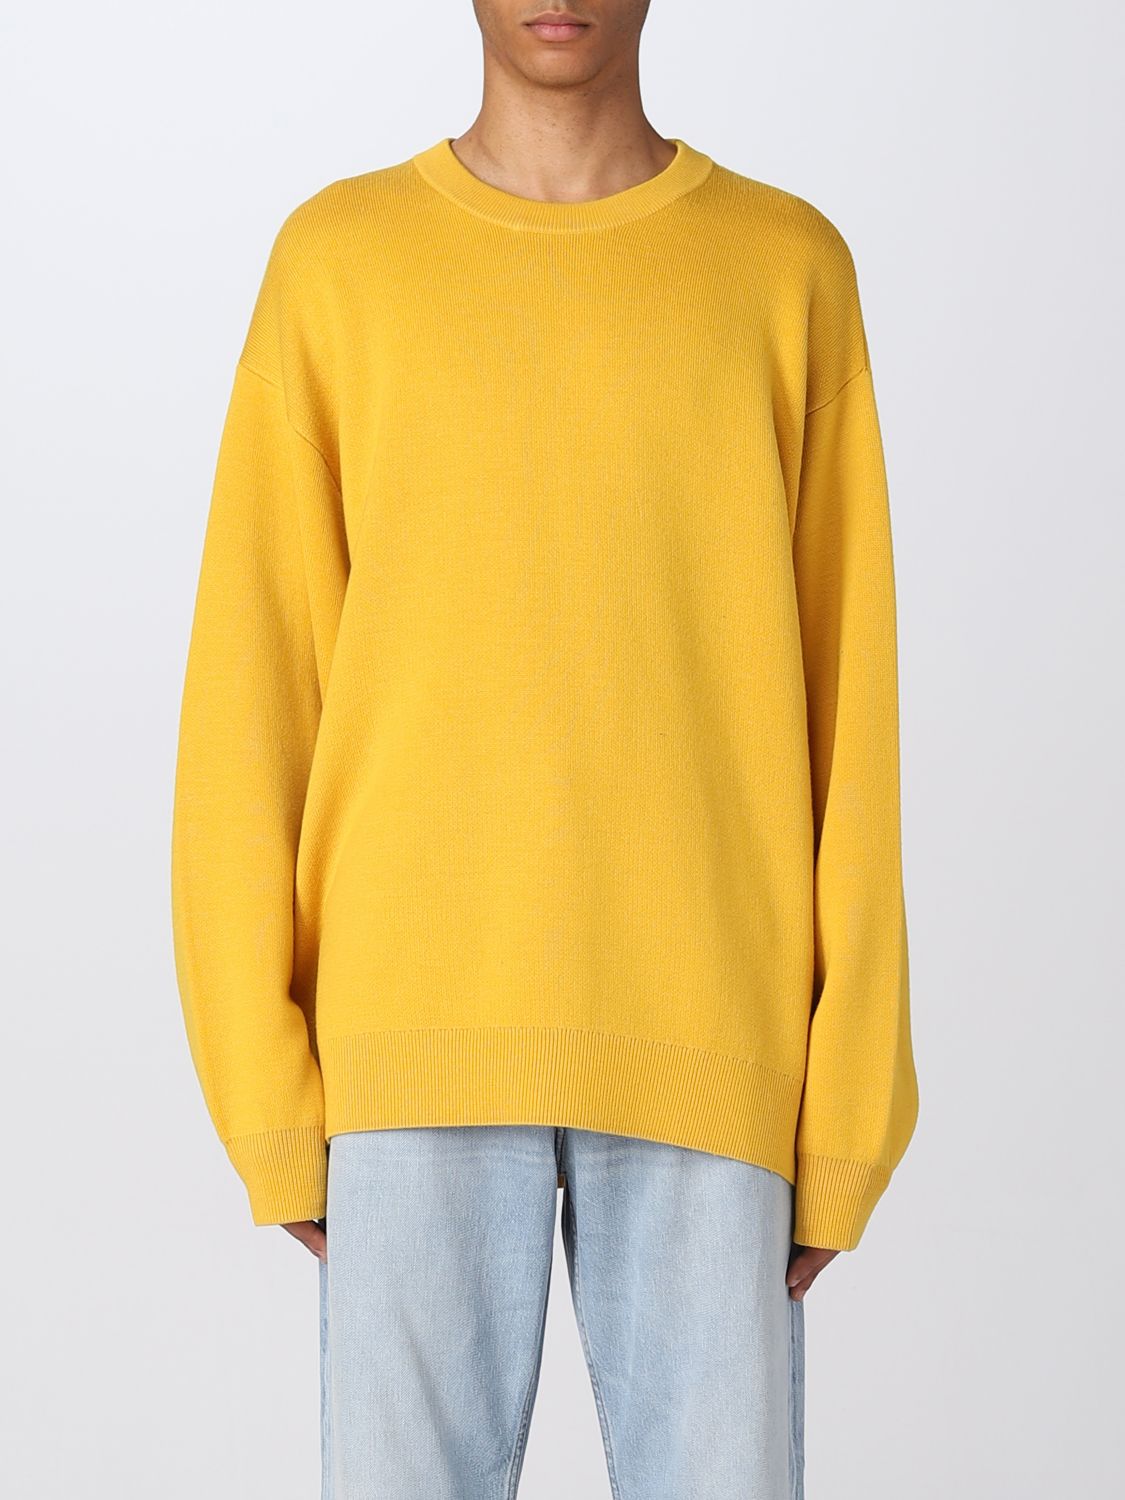 ACNE STUDIOS: sweater for man - Yellow | Acne Studios sweater B60249 ...